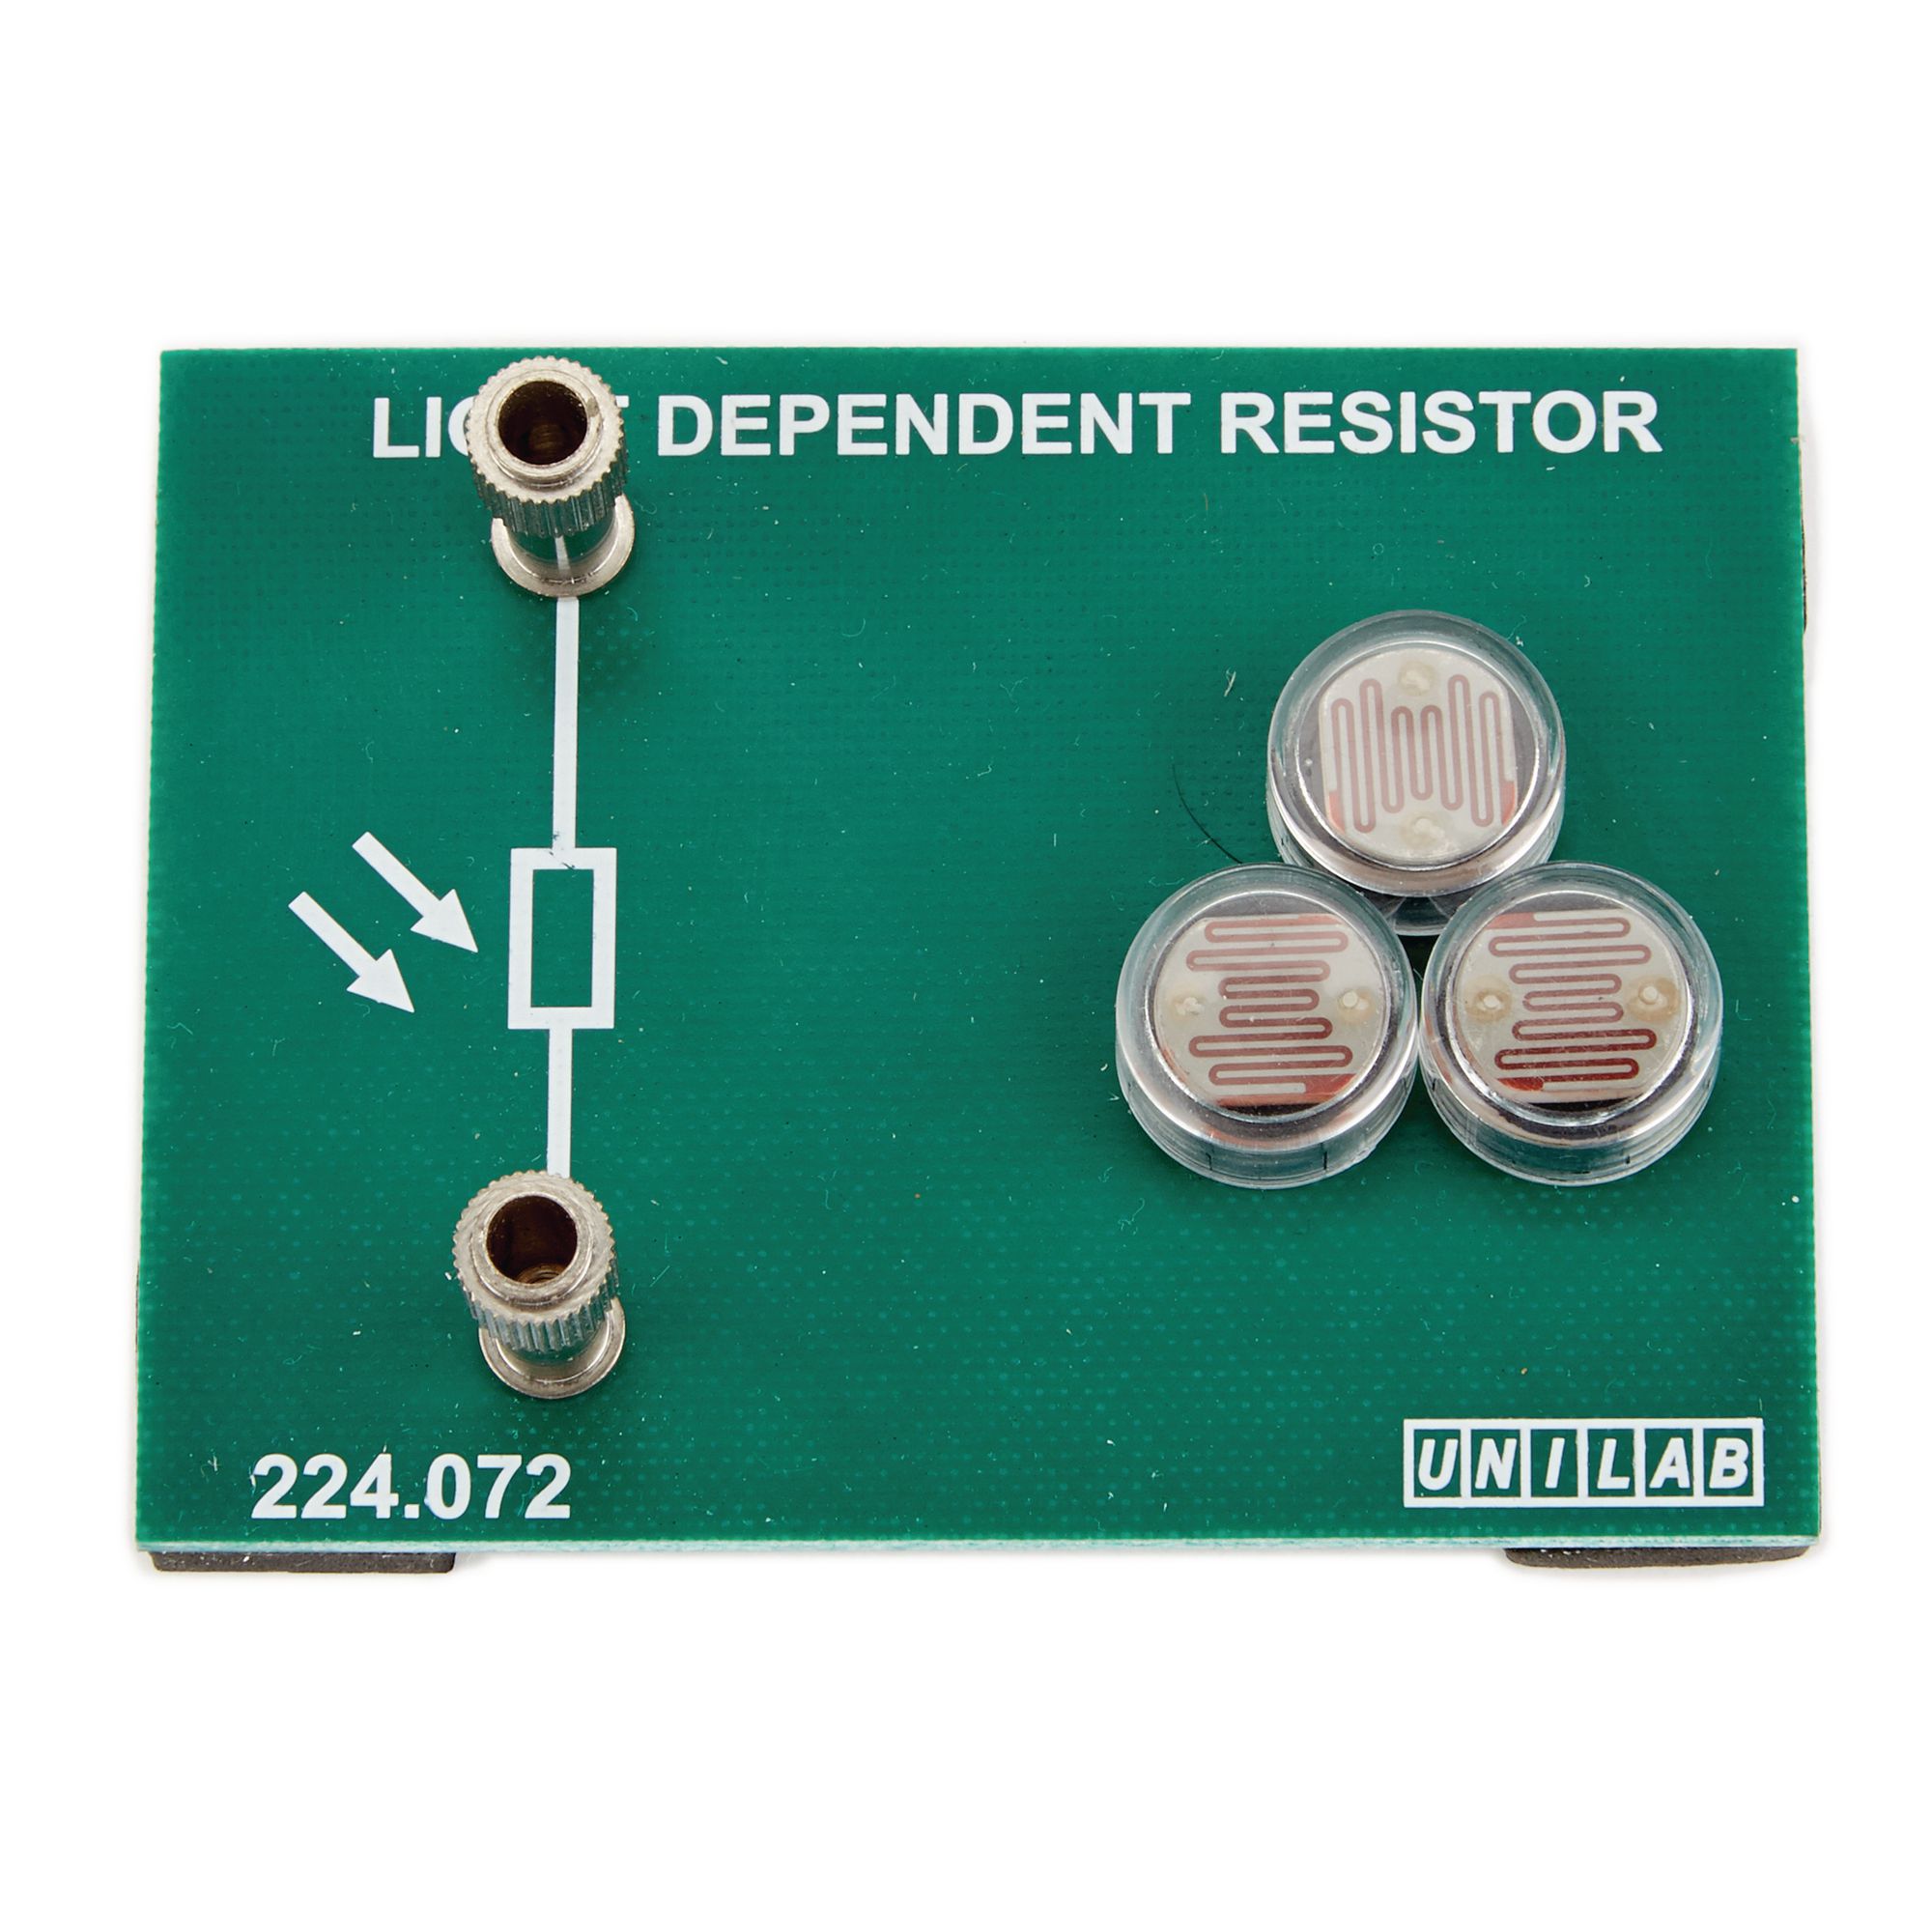 Light Dependent Resistor Unit